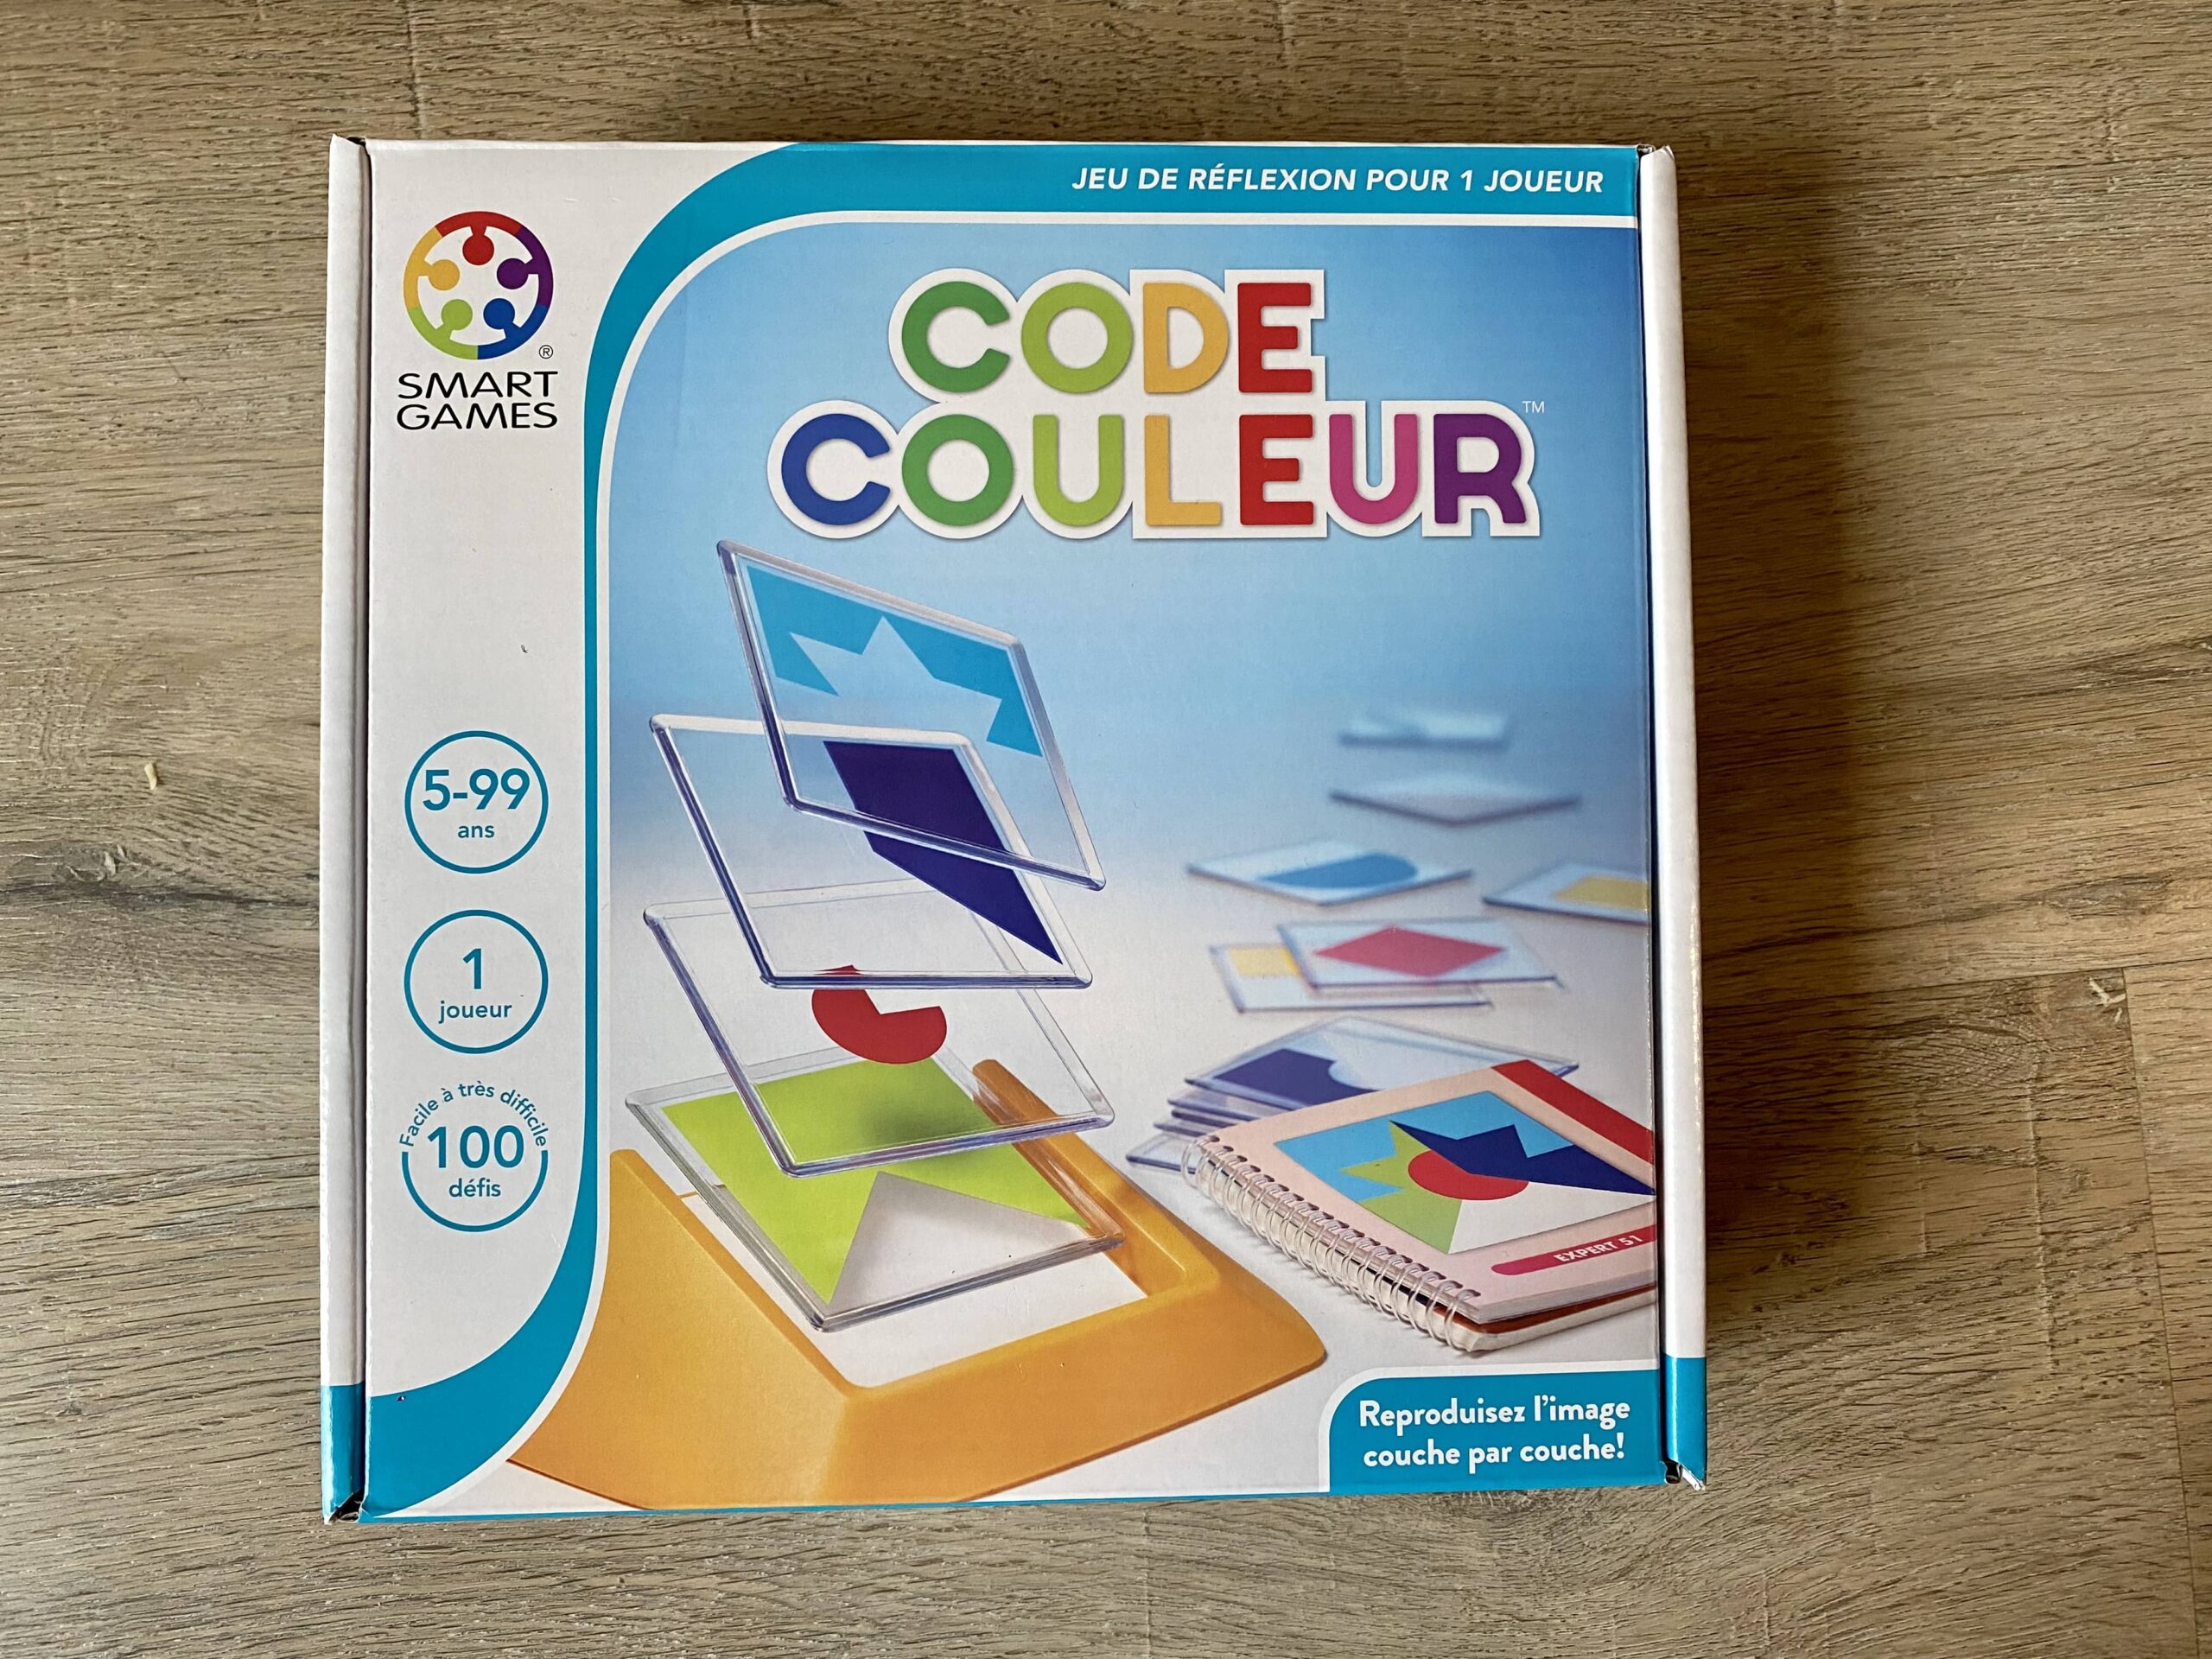 Code couleur - avis (SMART GAMES) - Bimbelot